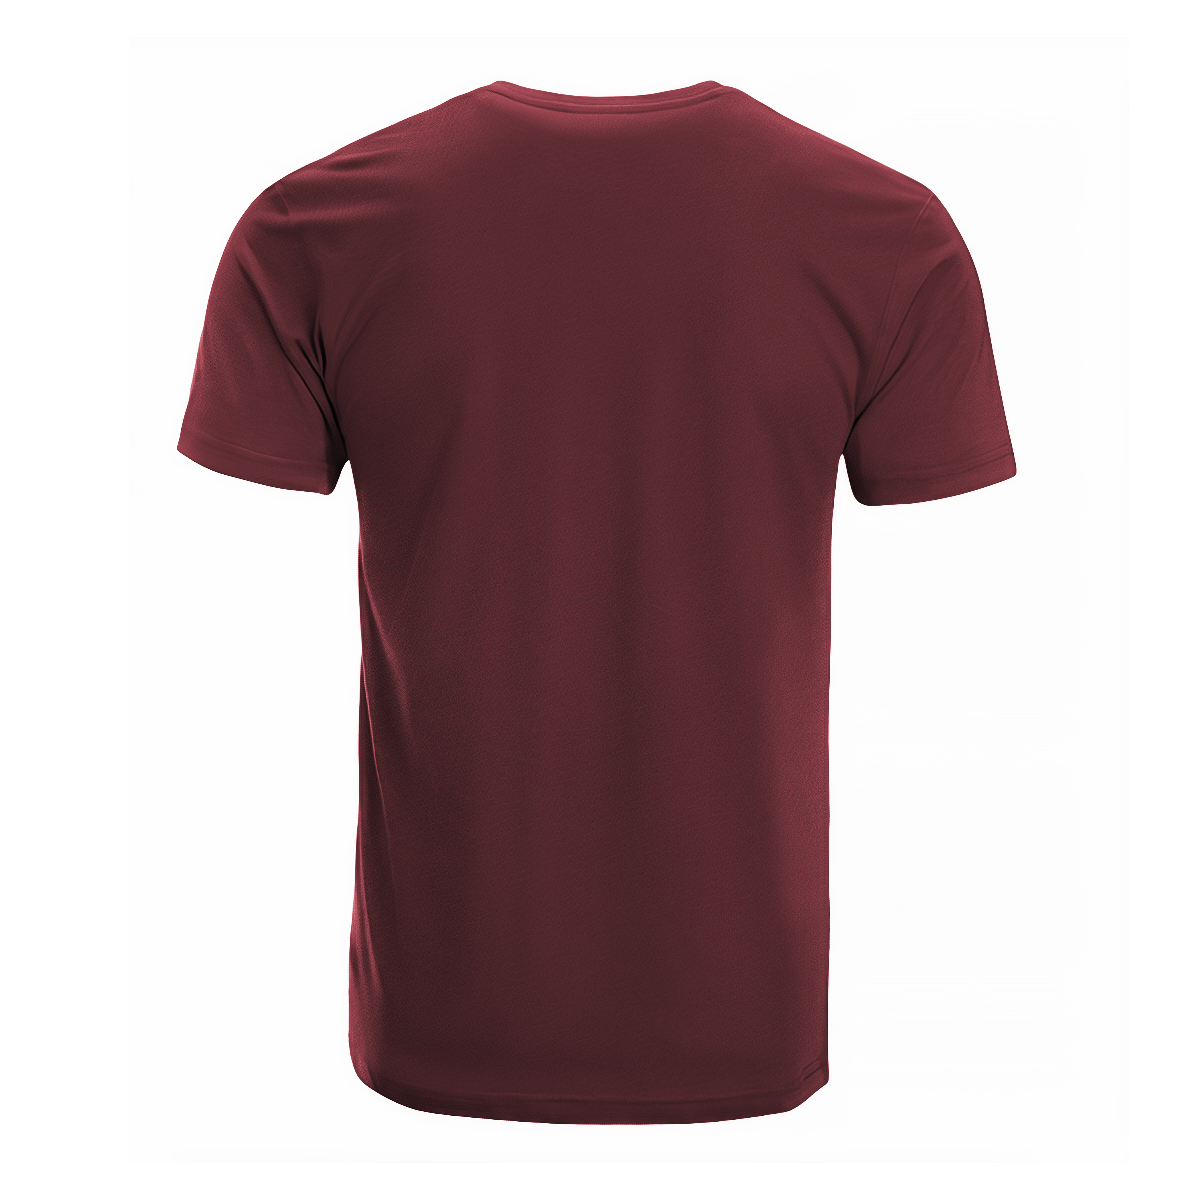 Ramsay Tartan Crest T-shirt - I'm not yelling style